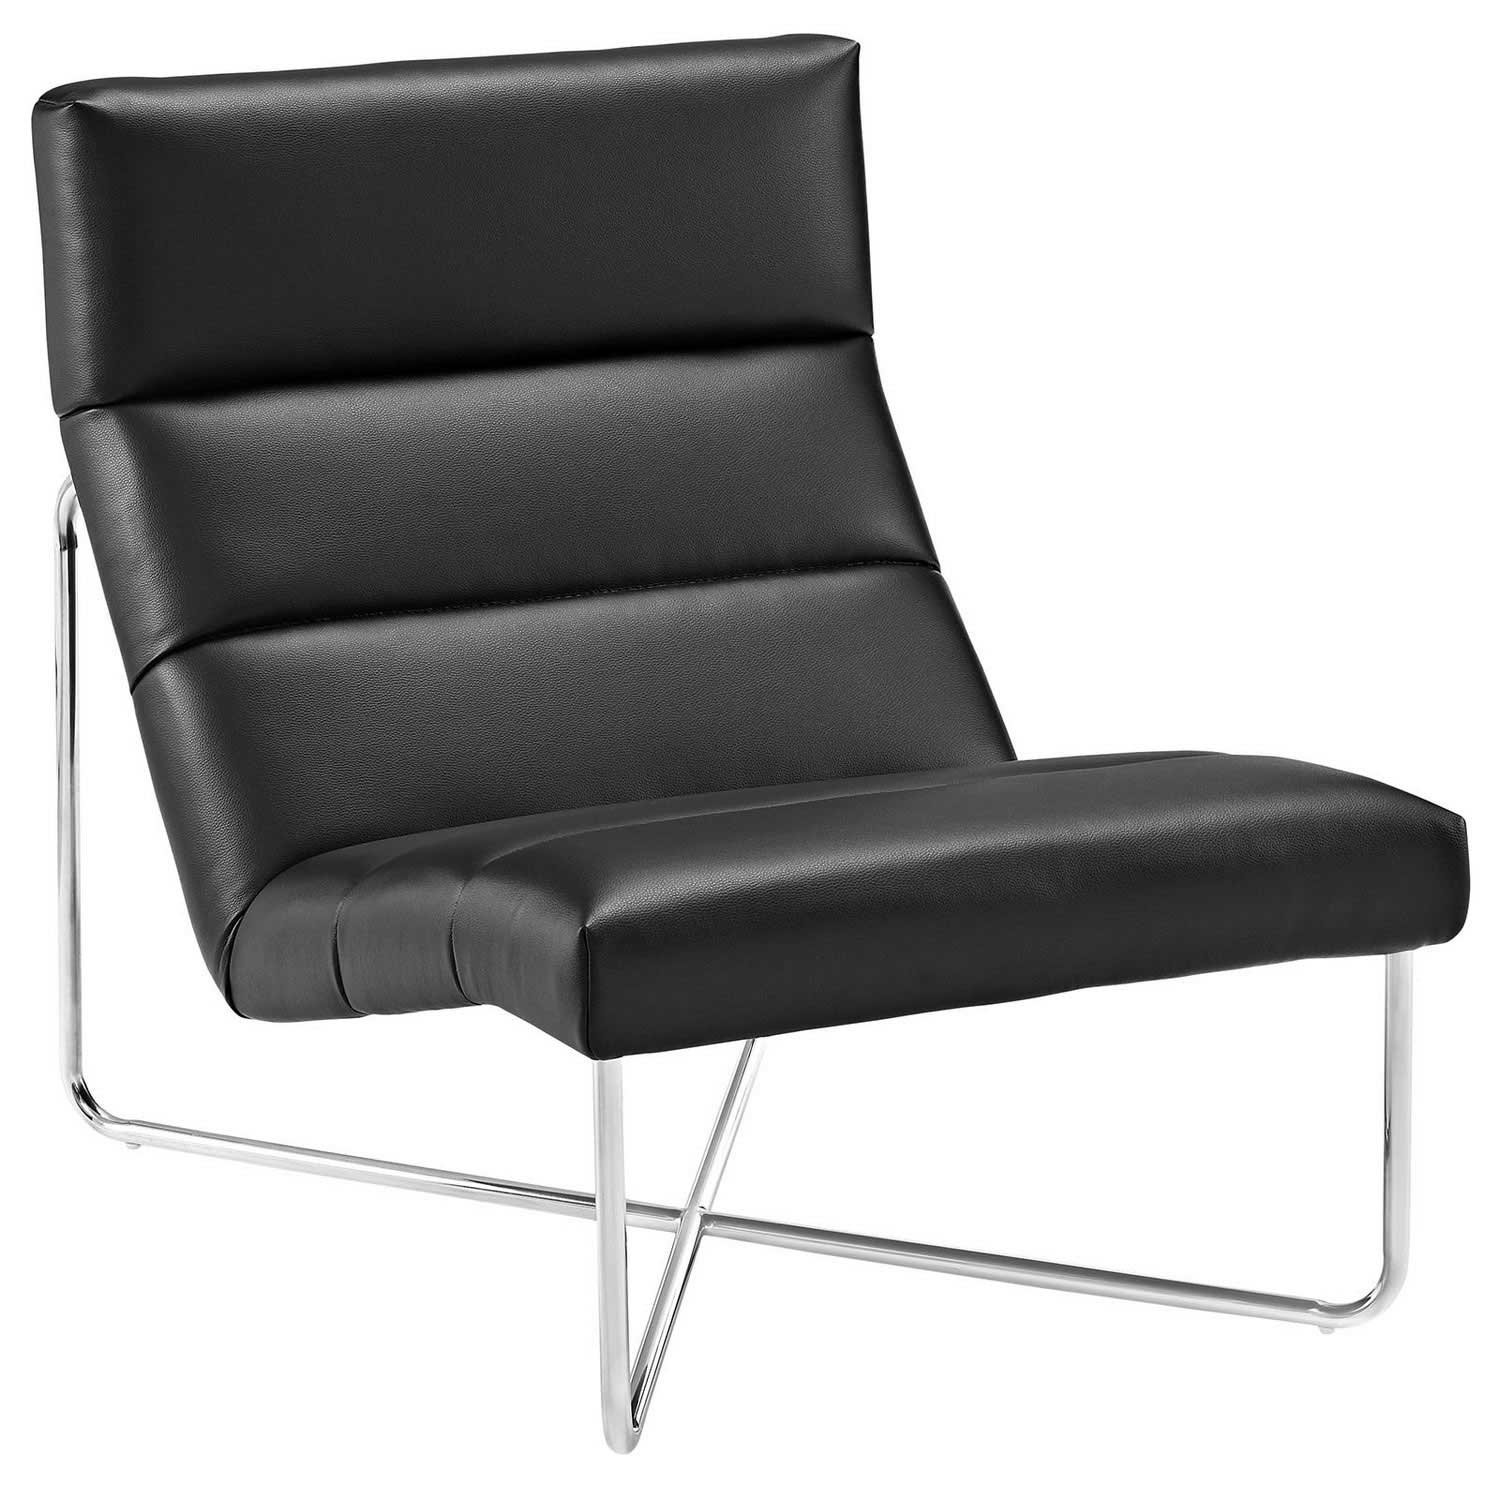 Modway Reach Lounge Chair - Black